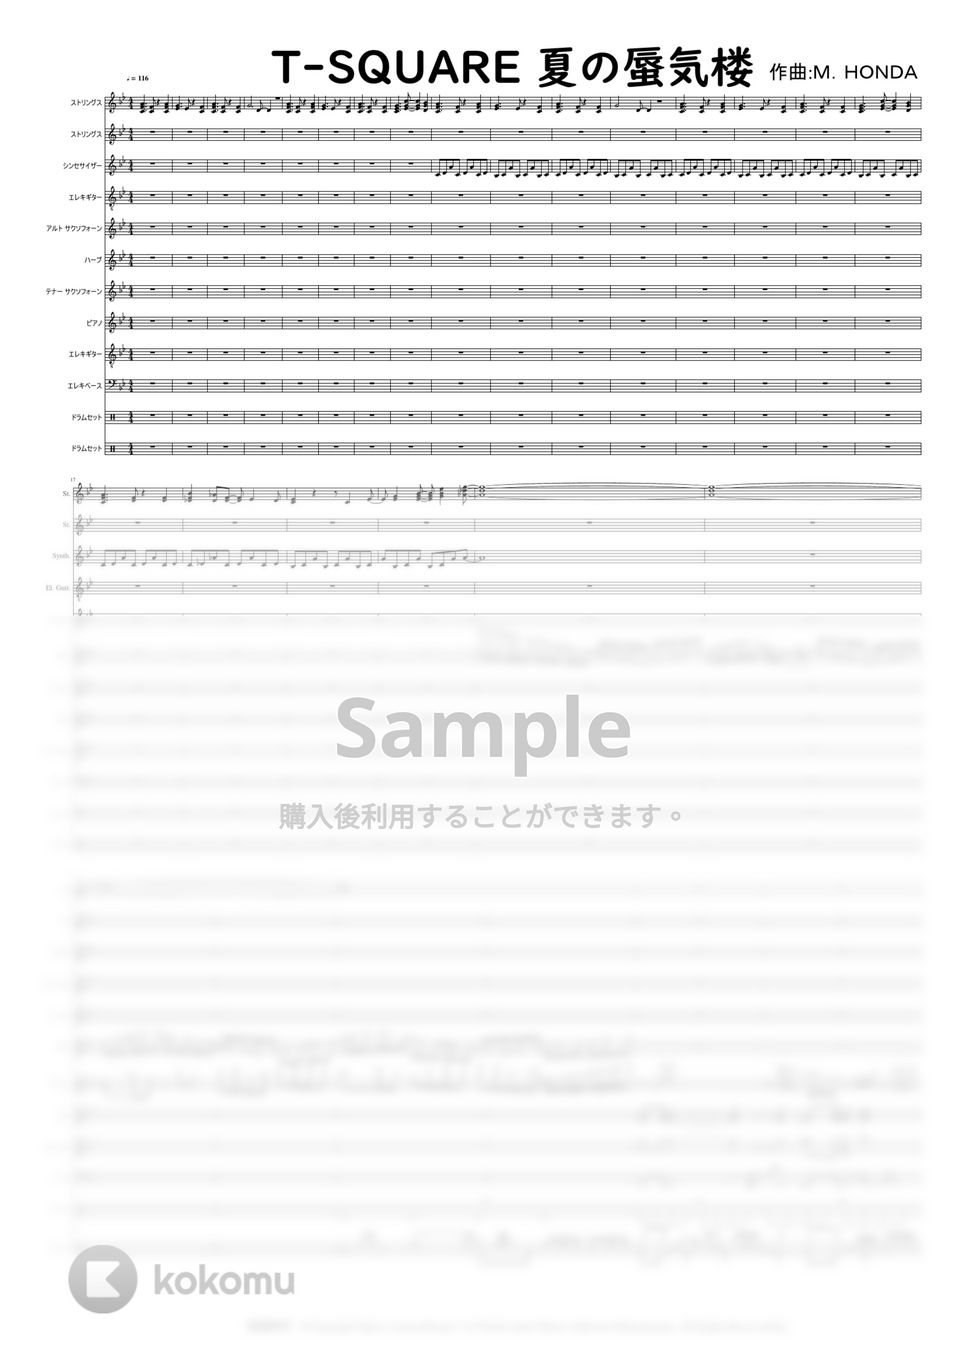 T-SQUARE　作曲：M. HONDA 本田雅人 - T-SQUARE 夏の蜃気楼 by Mitsuru Minamiyama